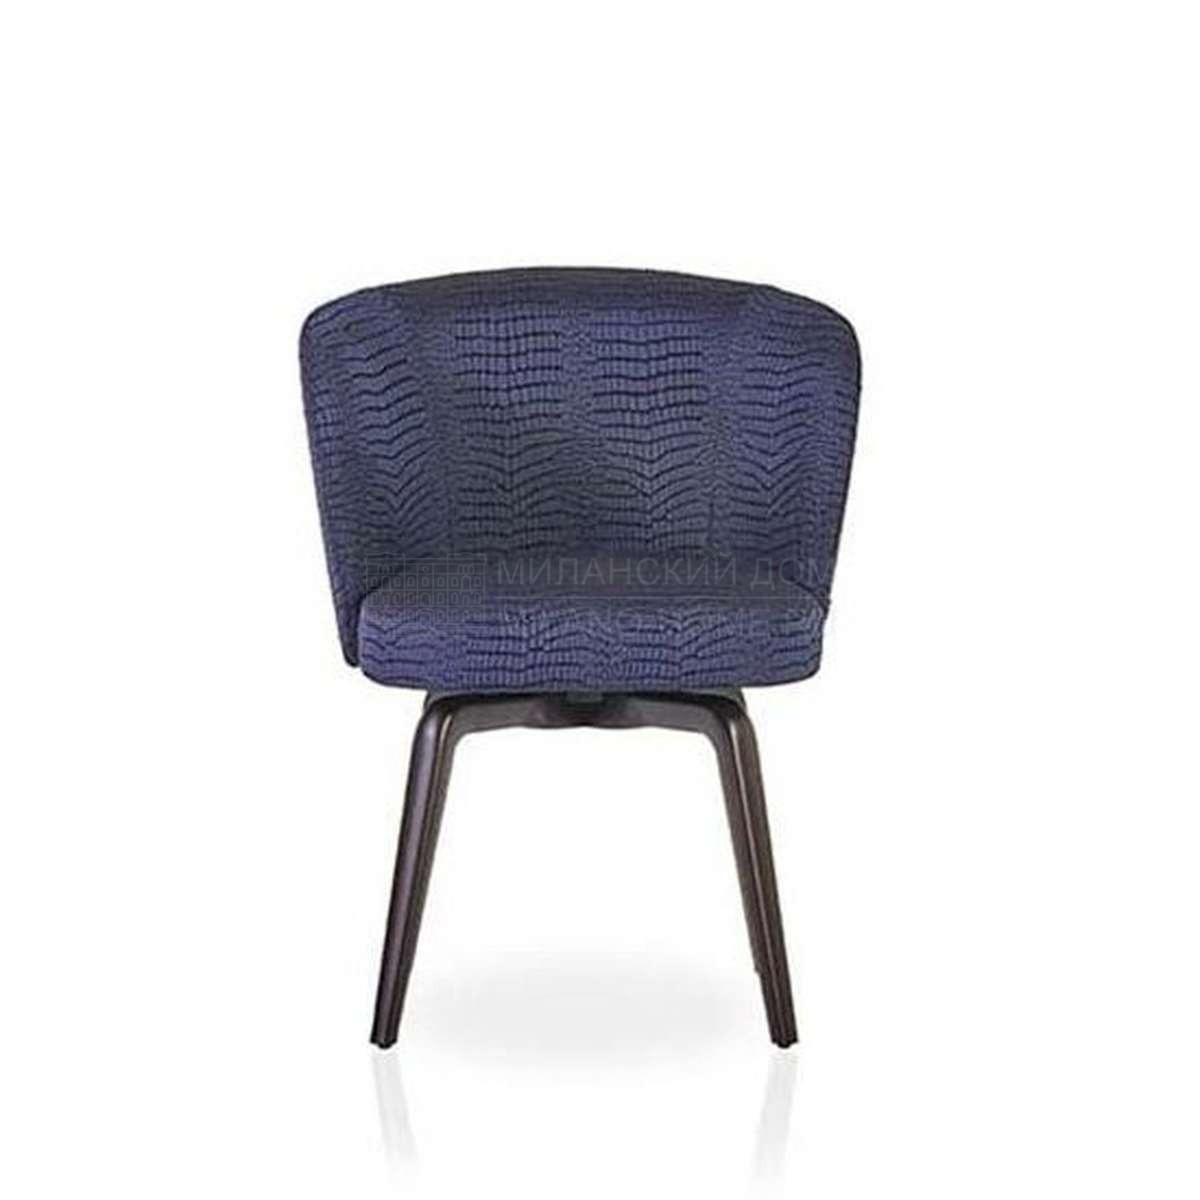 Стул Club chair luxence из Италии фабрики FENDI Casa